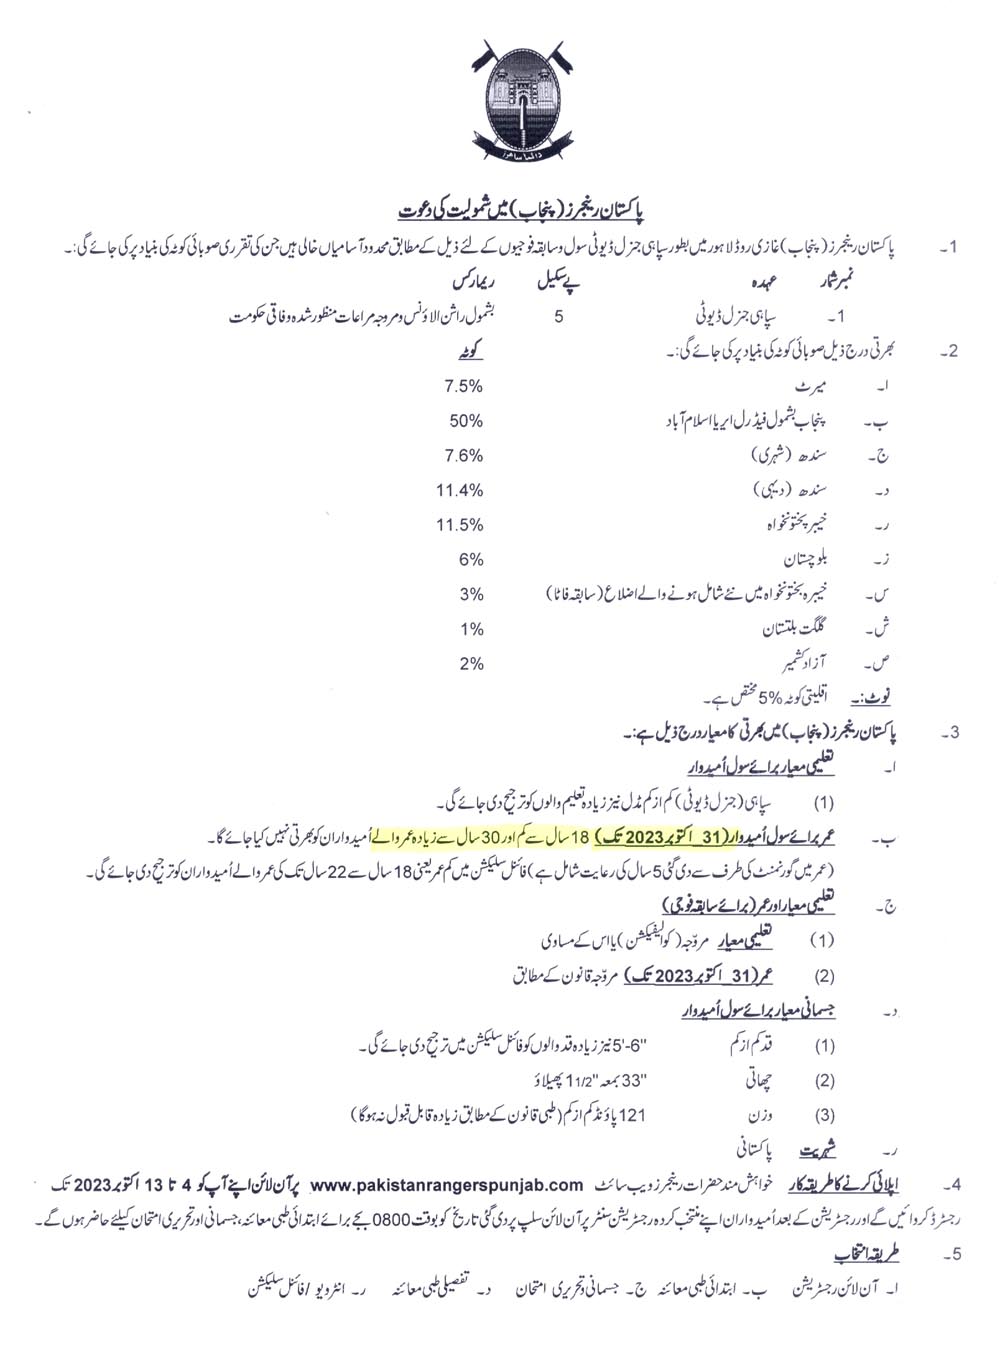 Pakistan rangers Punjab jobs 2023